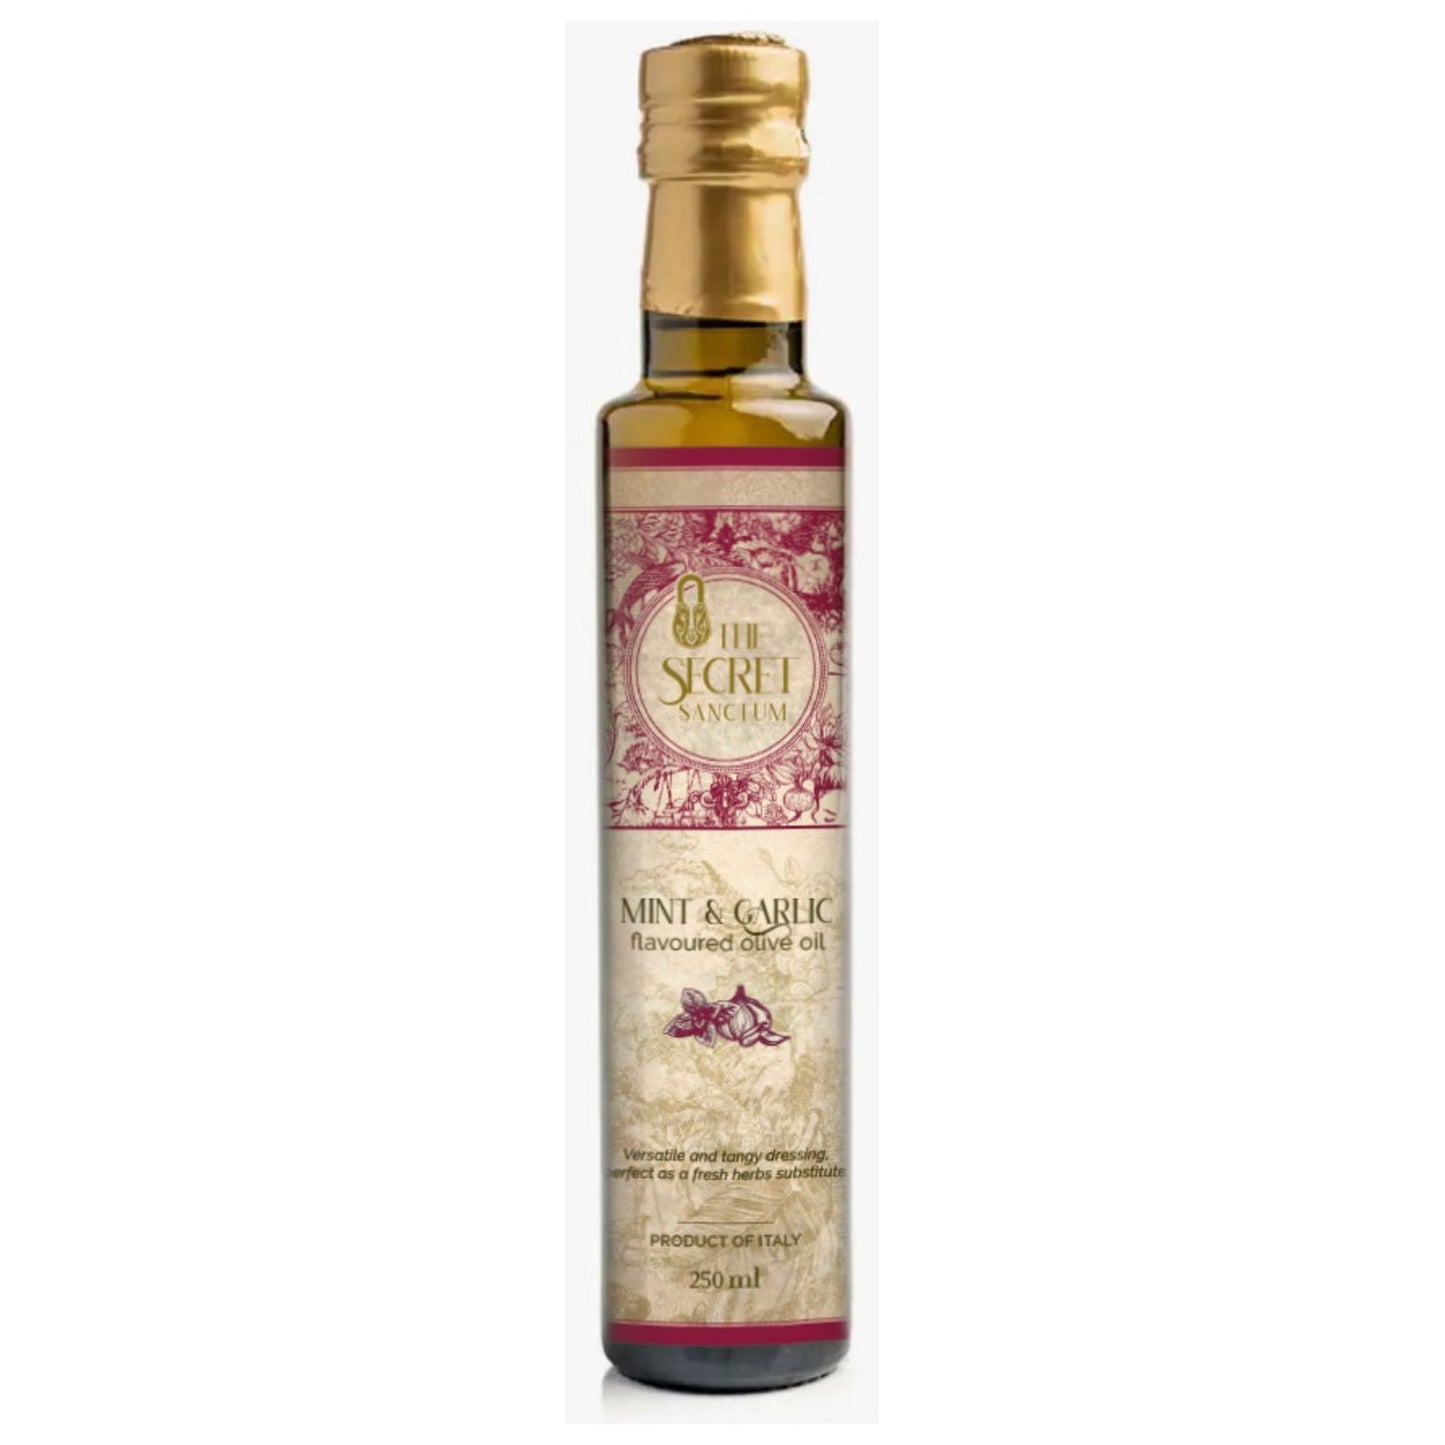 TSS MINT AND GARLIC flavoured olive oil 250 ml - Elegant